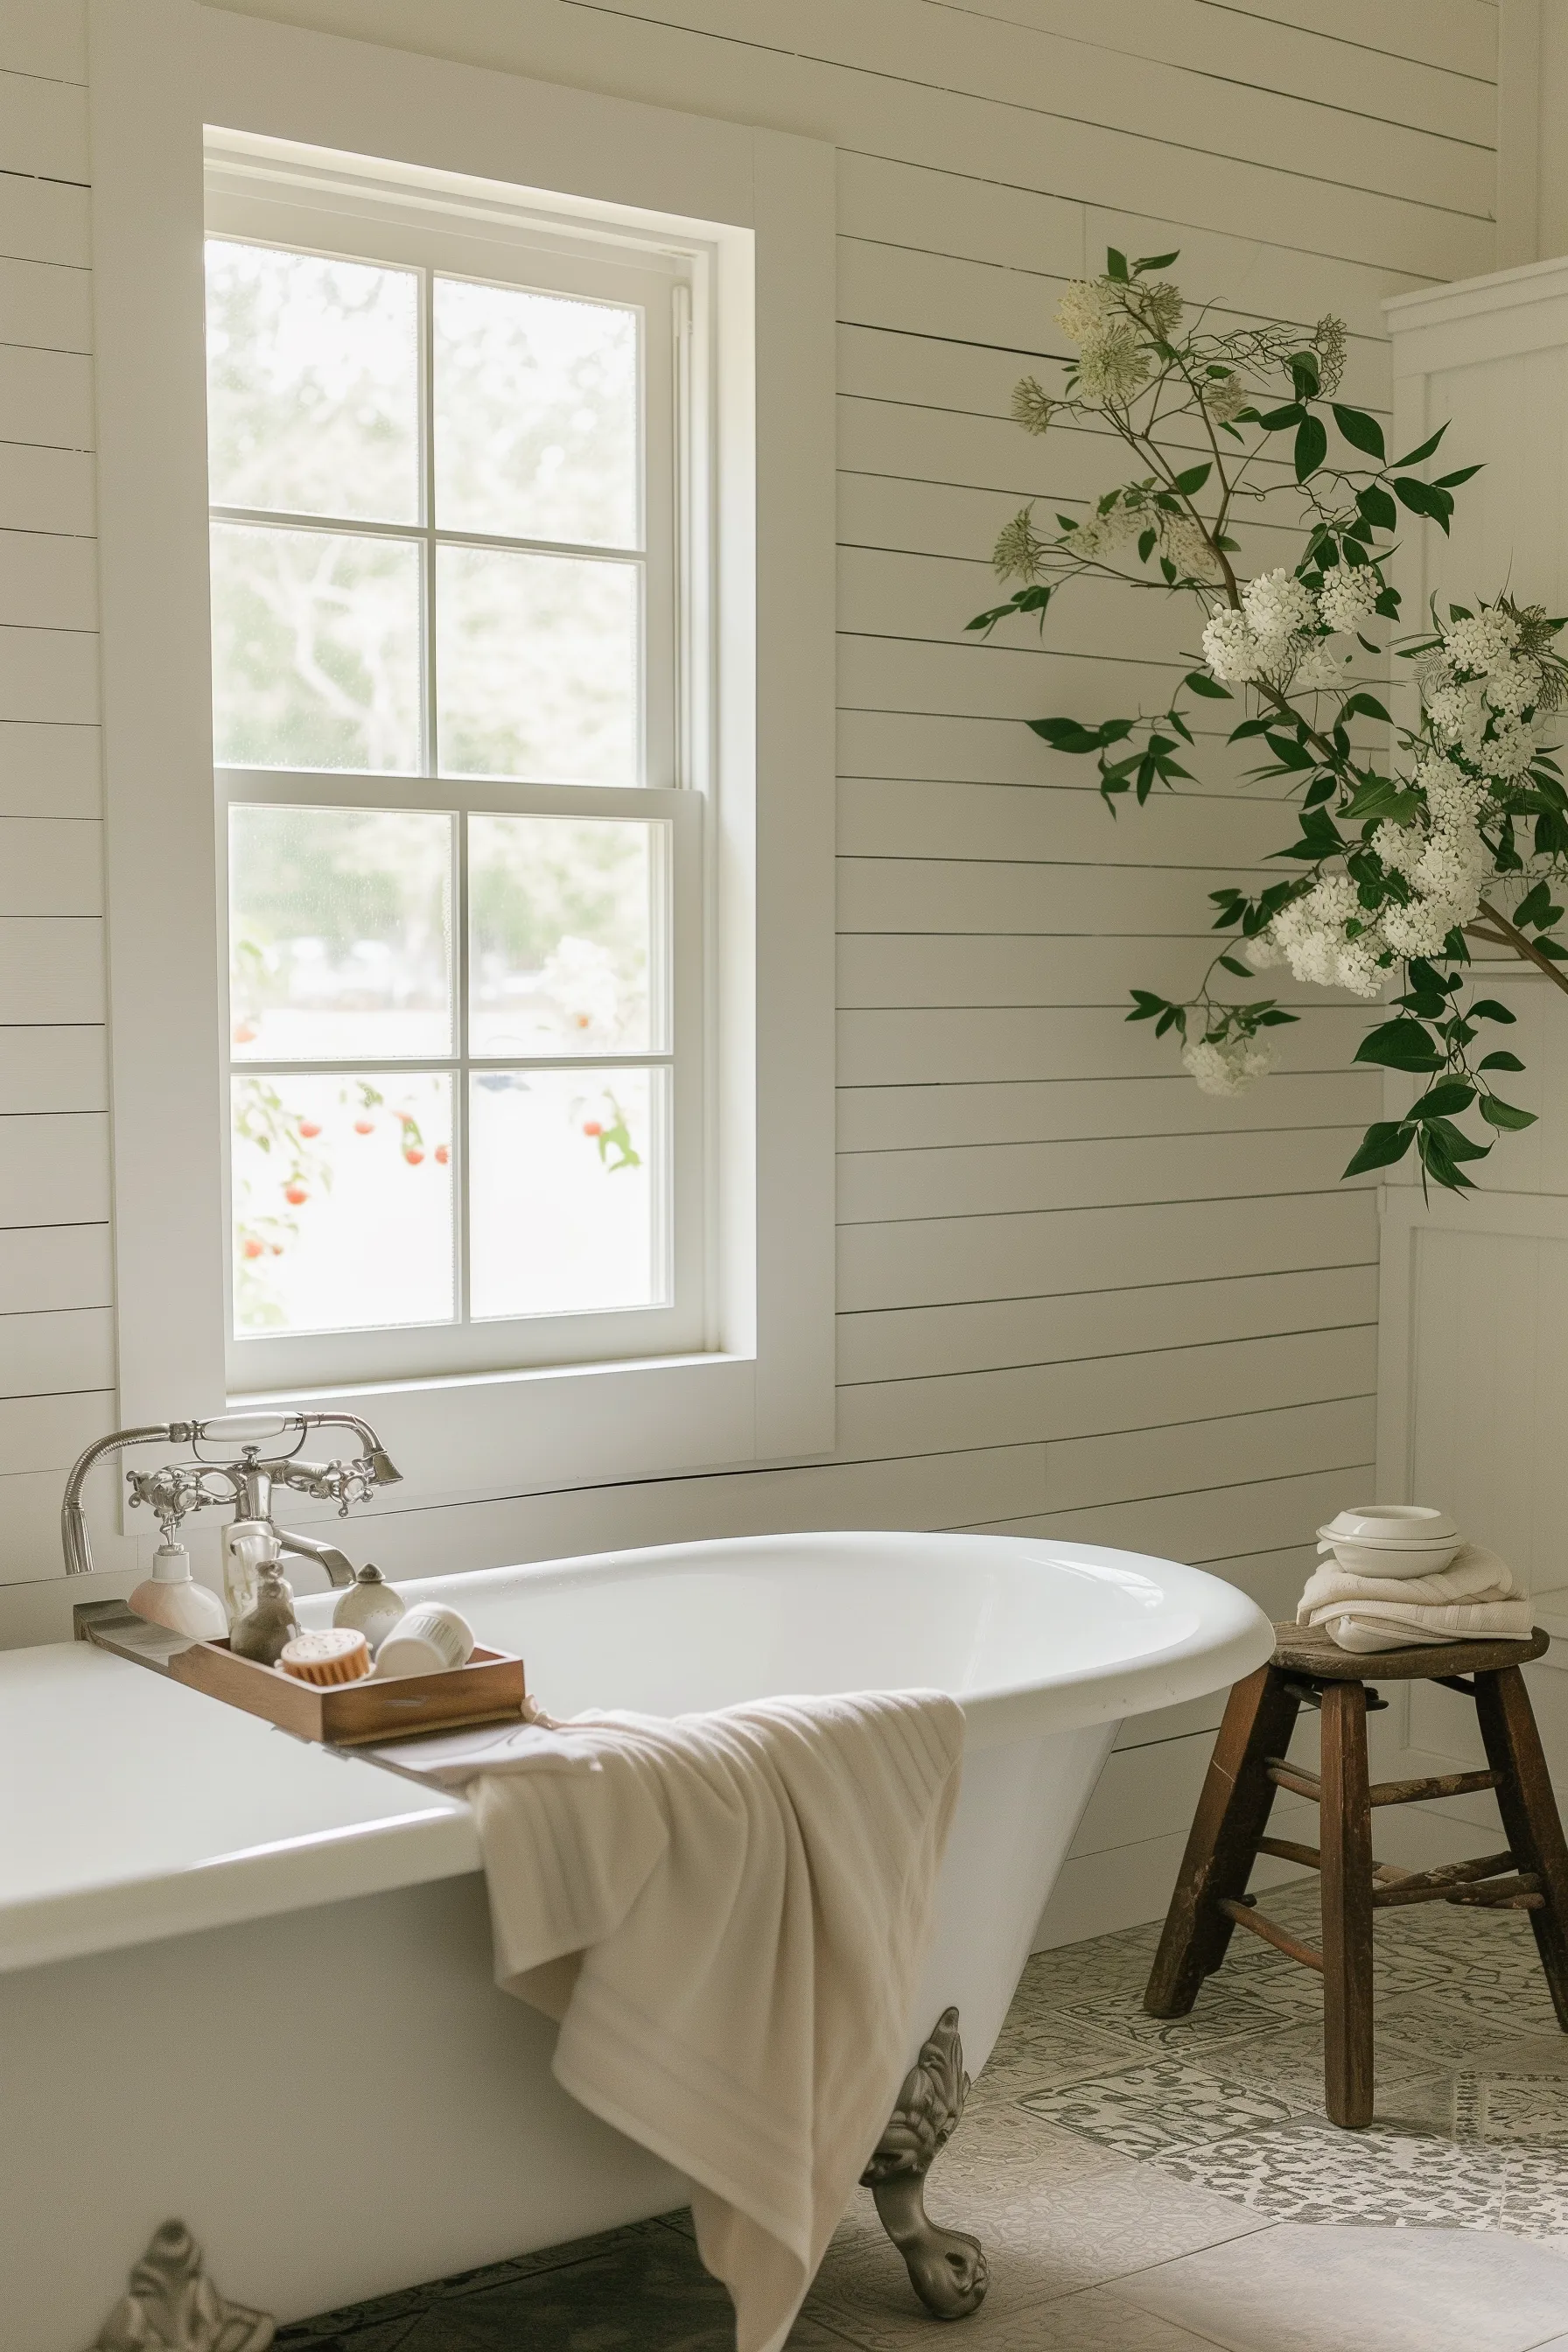 A farmhouse bathtub with tiled floor, a wooden stool and natural light.